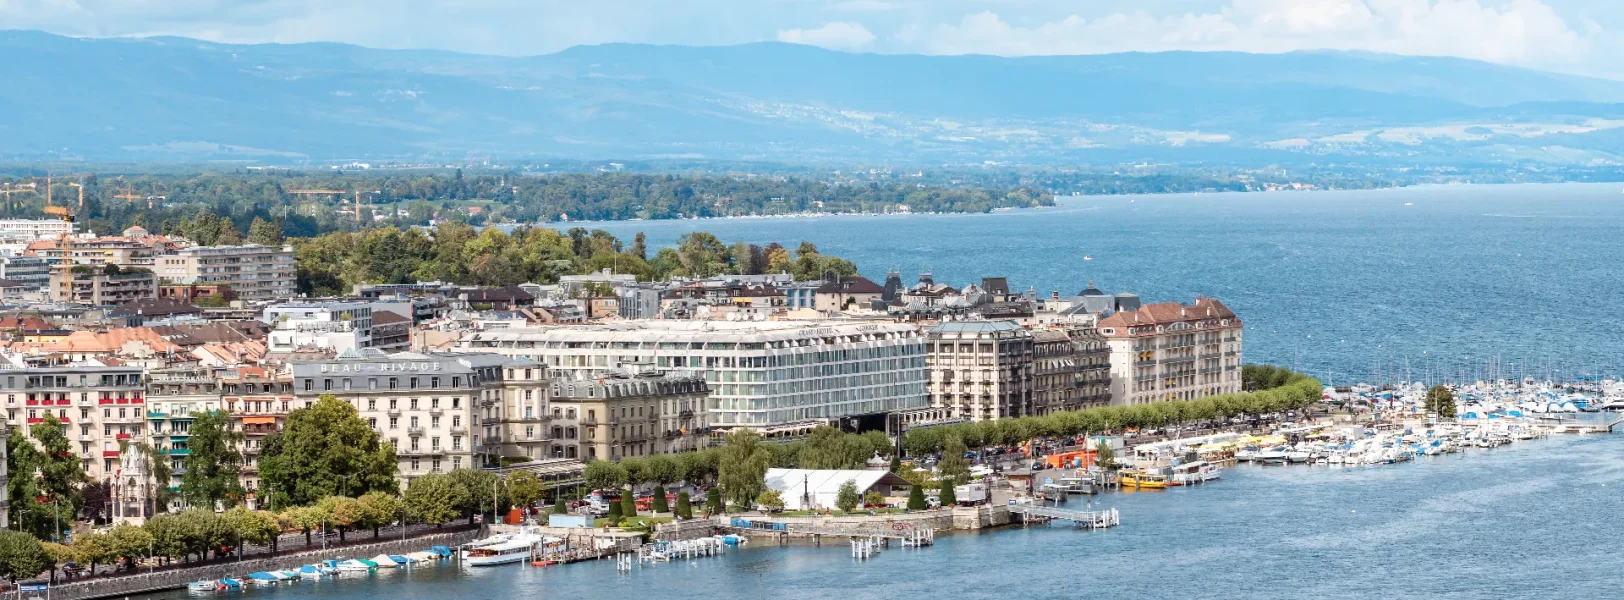 High view of Geneva's city center